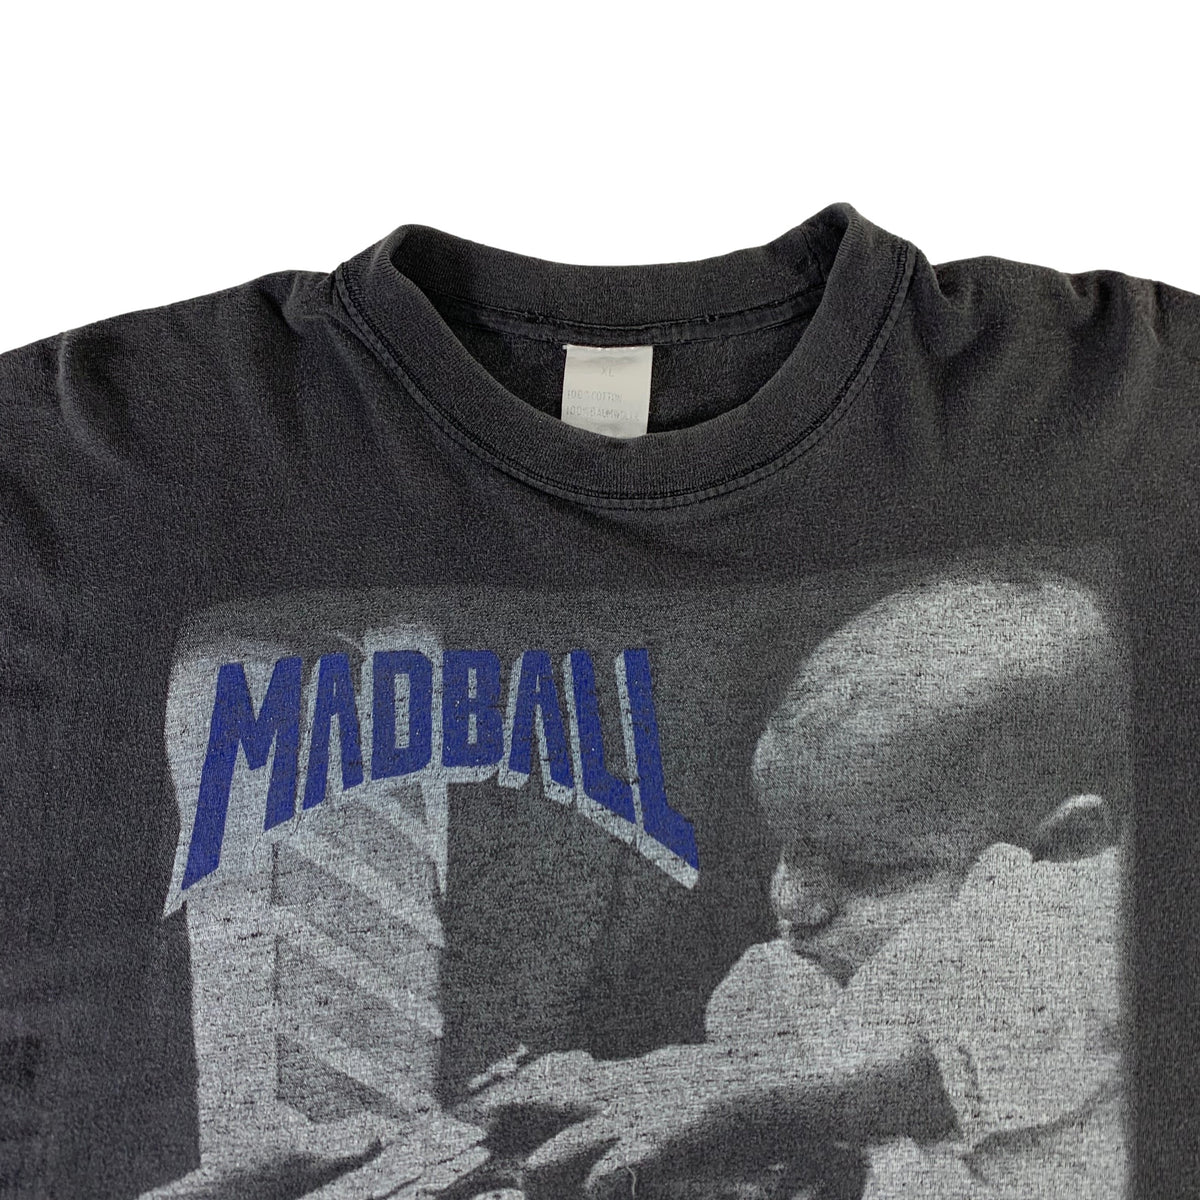 Vintage Madball &quot;Set it Off&quot; T-Shirt - jointcustodydc